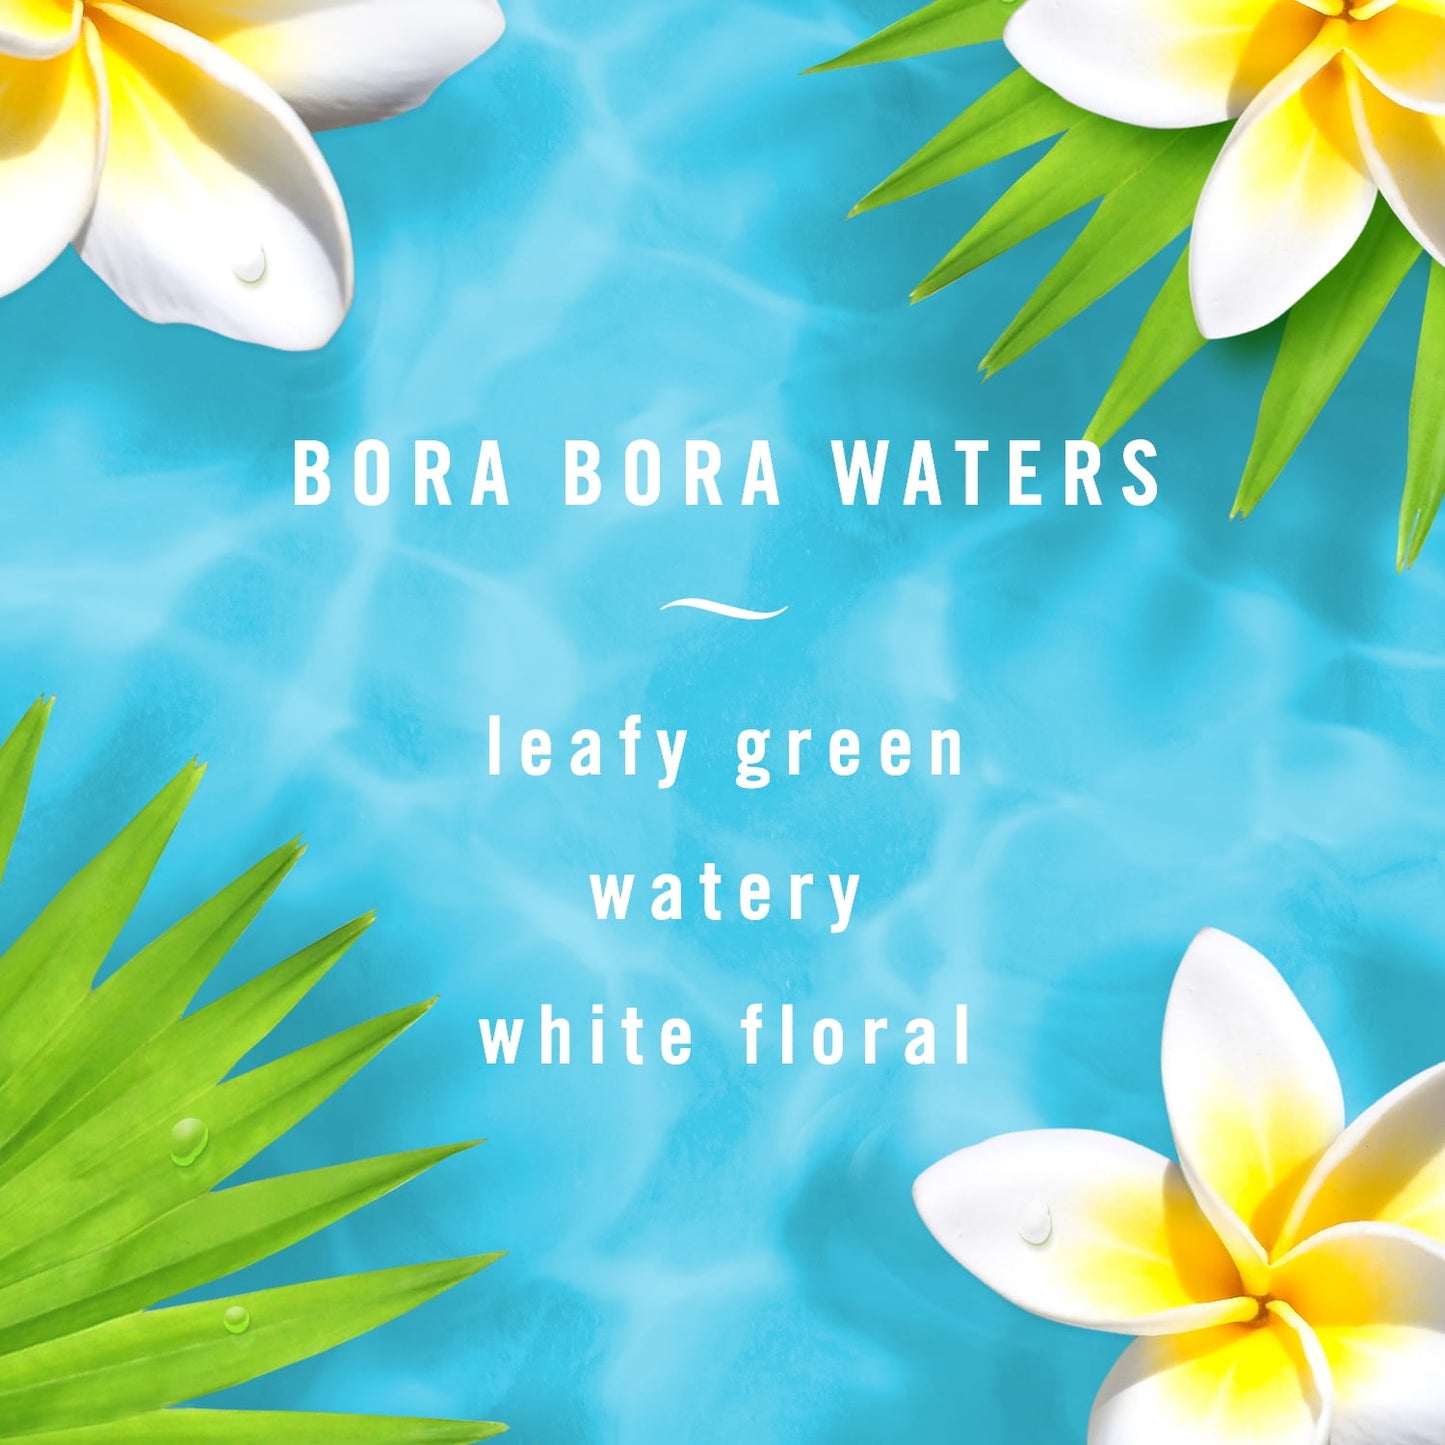 Febreze Odor-Fighting Air Freshener, Bora Bora Water Fresh Scent, Pack of 2, 8.8 oz each